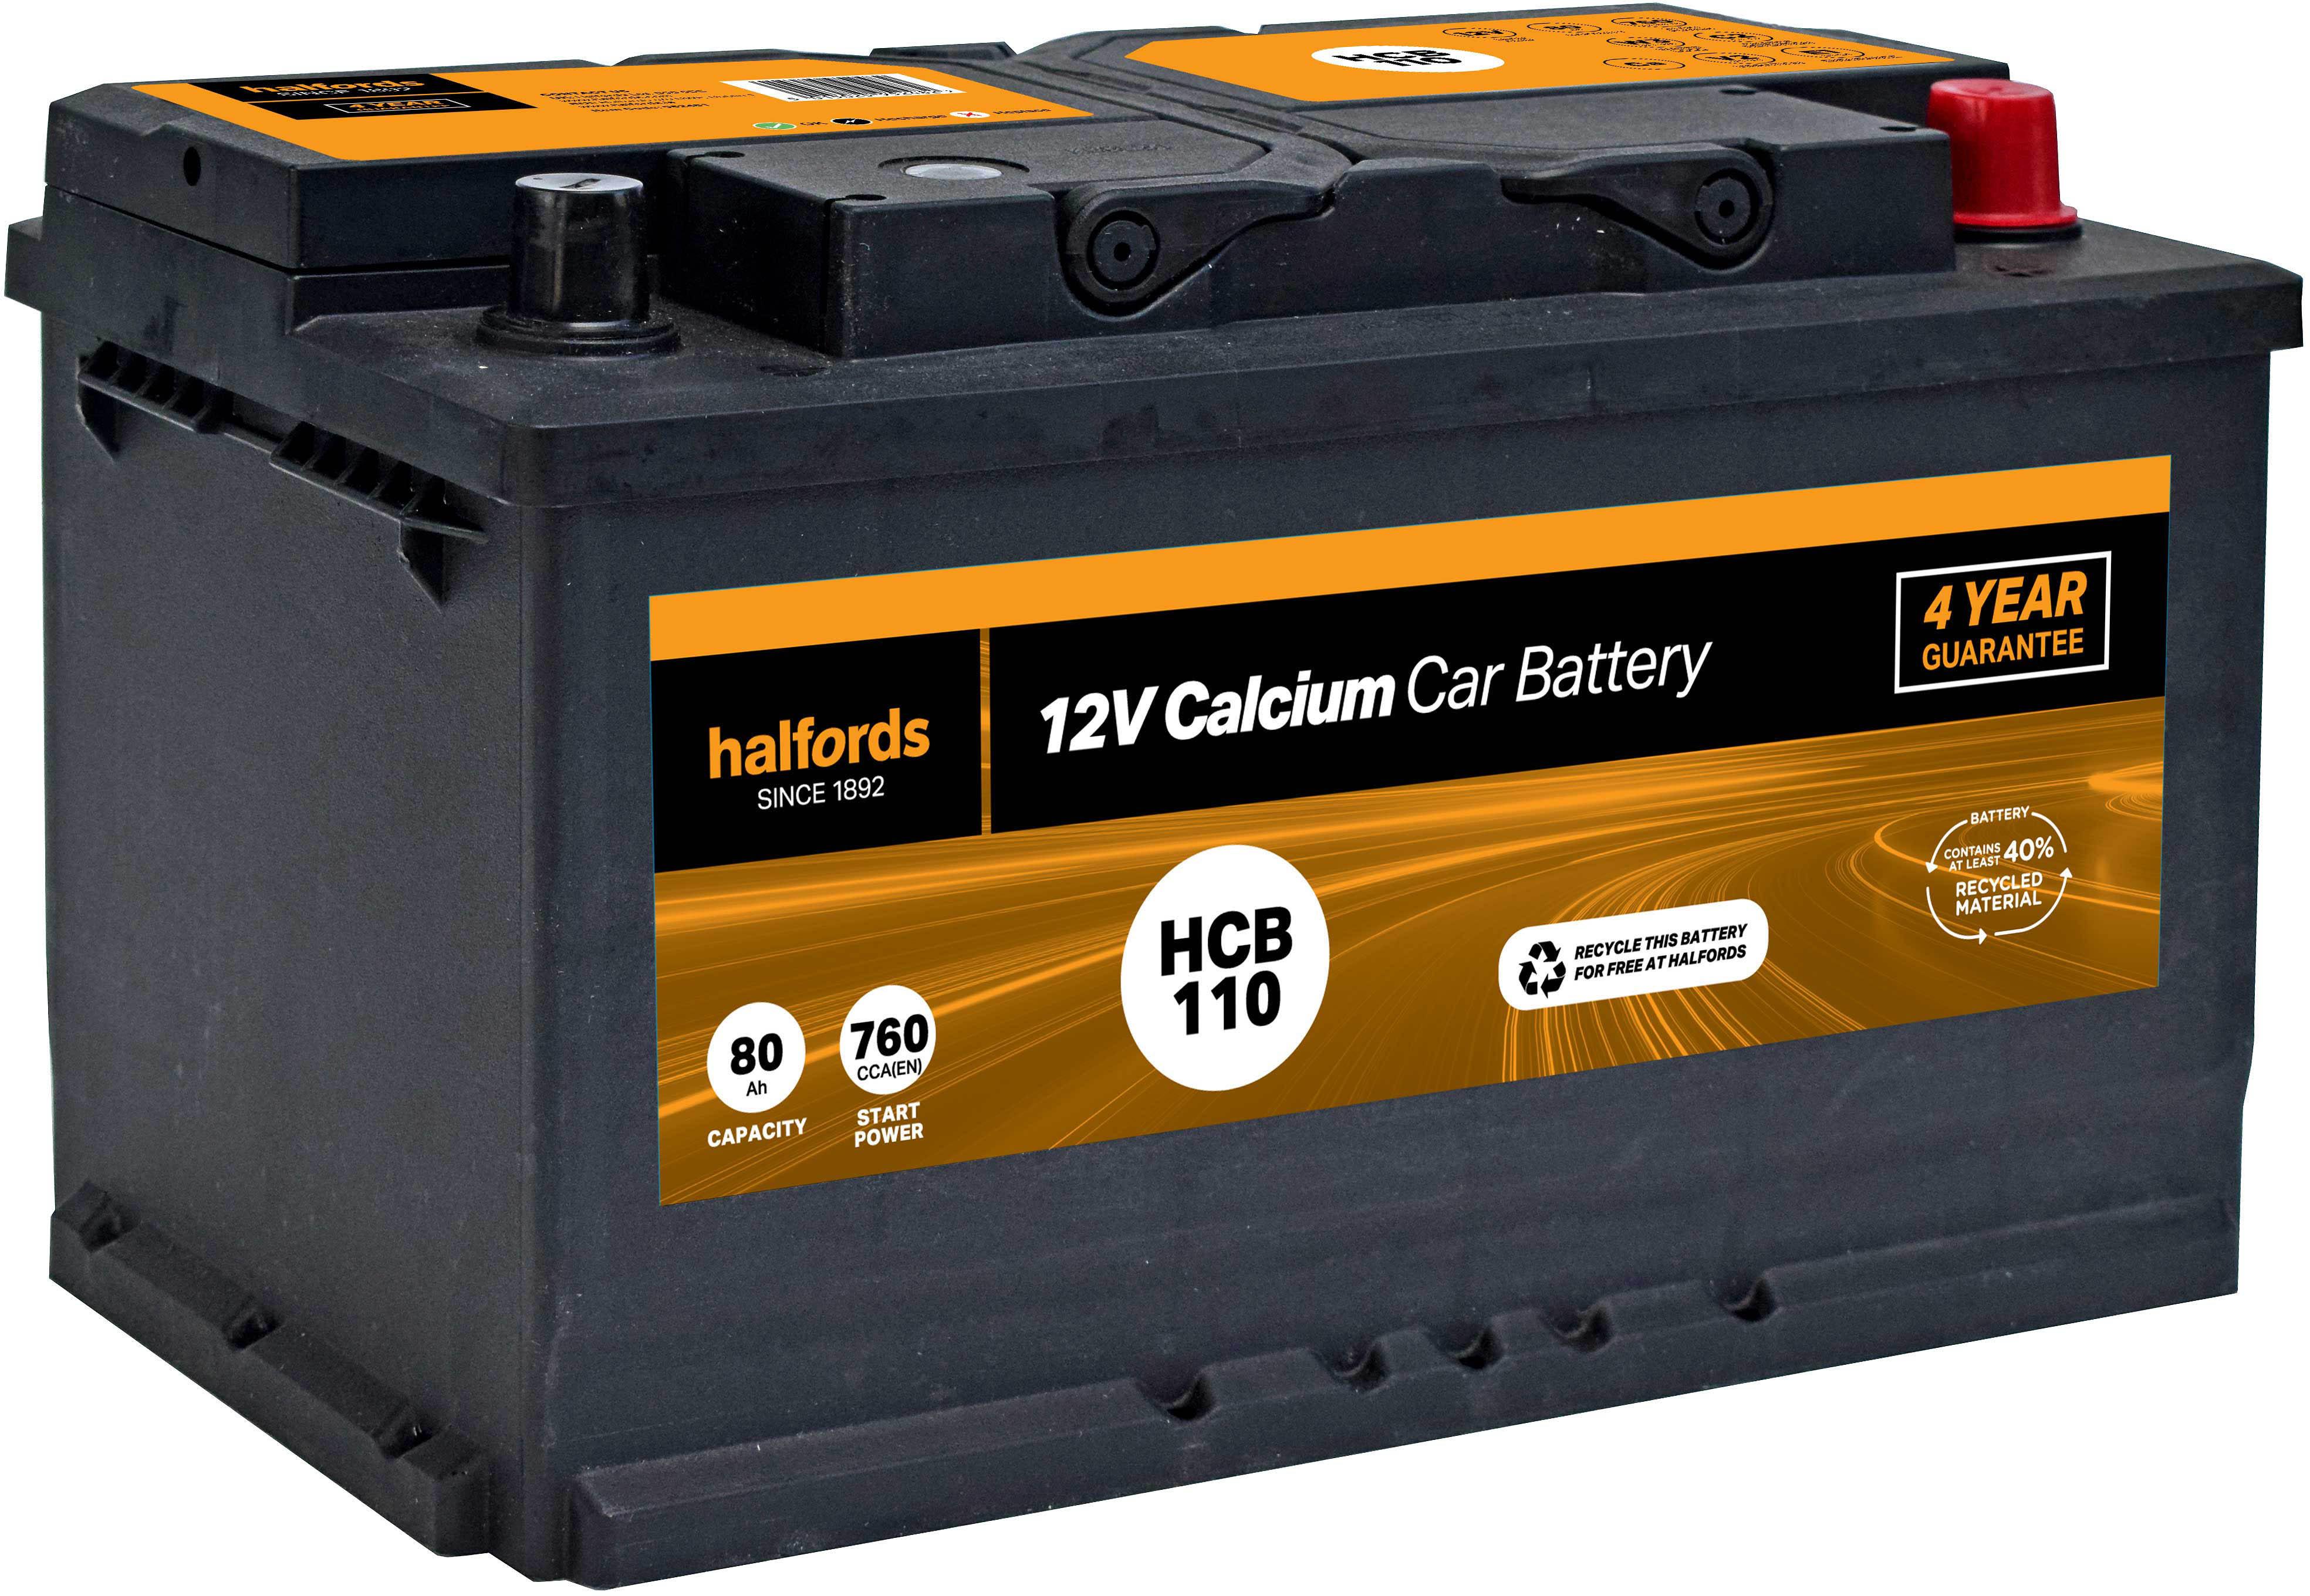 Halfords Hb110 Lead Acid 12V Car Battery 3 Year Guarantee